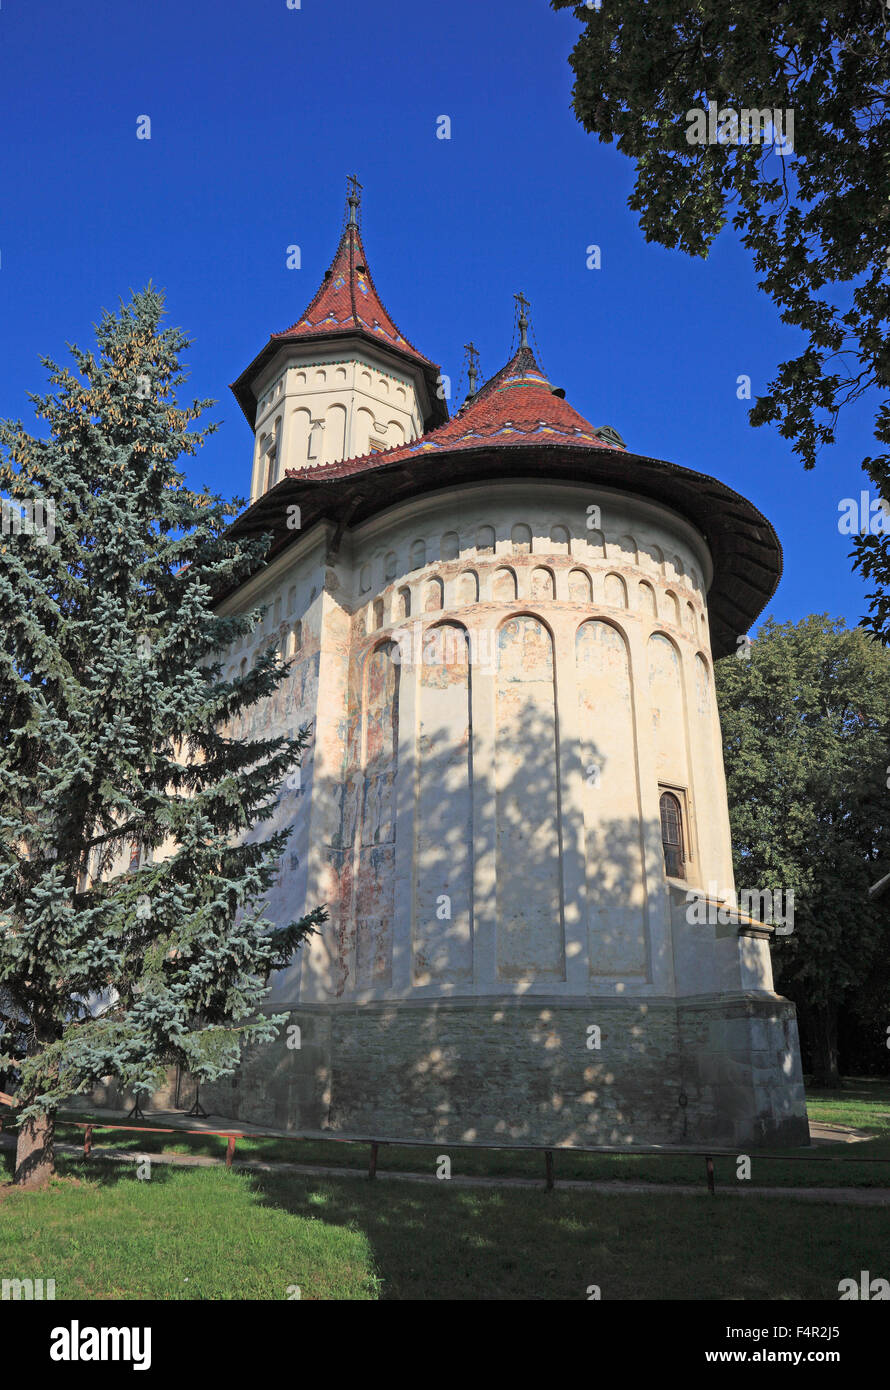 Flodor Iancu, Suceava, Romania, Monastery of St. Gheorghe, Biserica Sf. Gheorghe Mirauiti, in Suceava, UNESCO World Heritage Sit Stock Photo